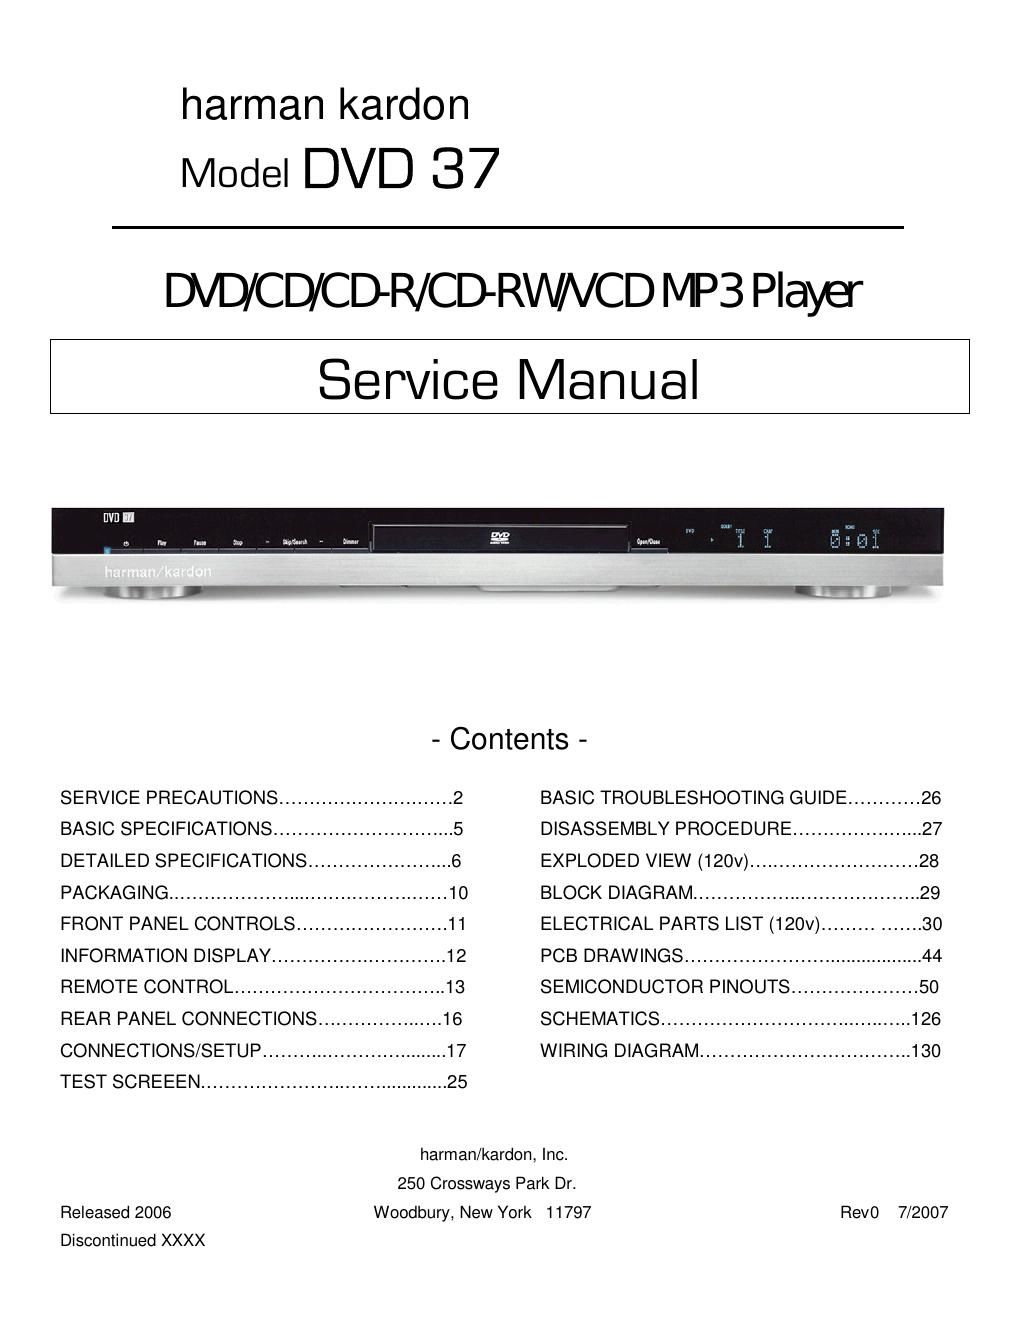 harman kardon dvd 37 service manual